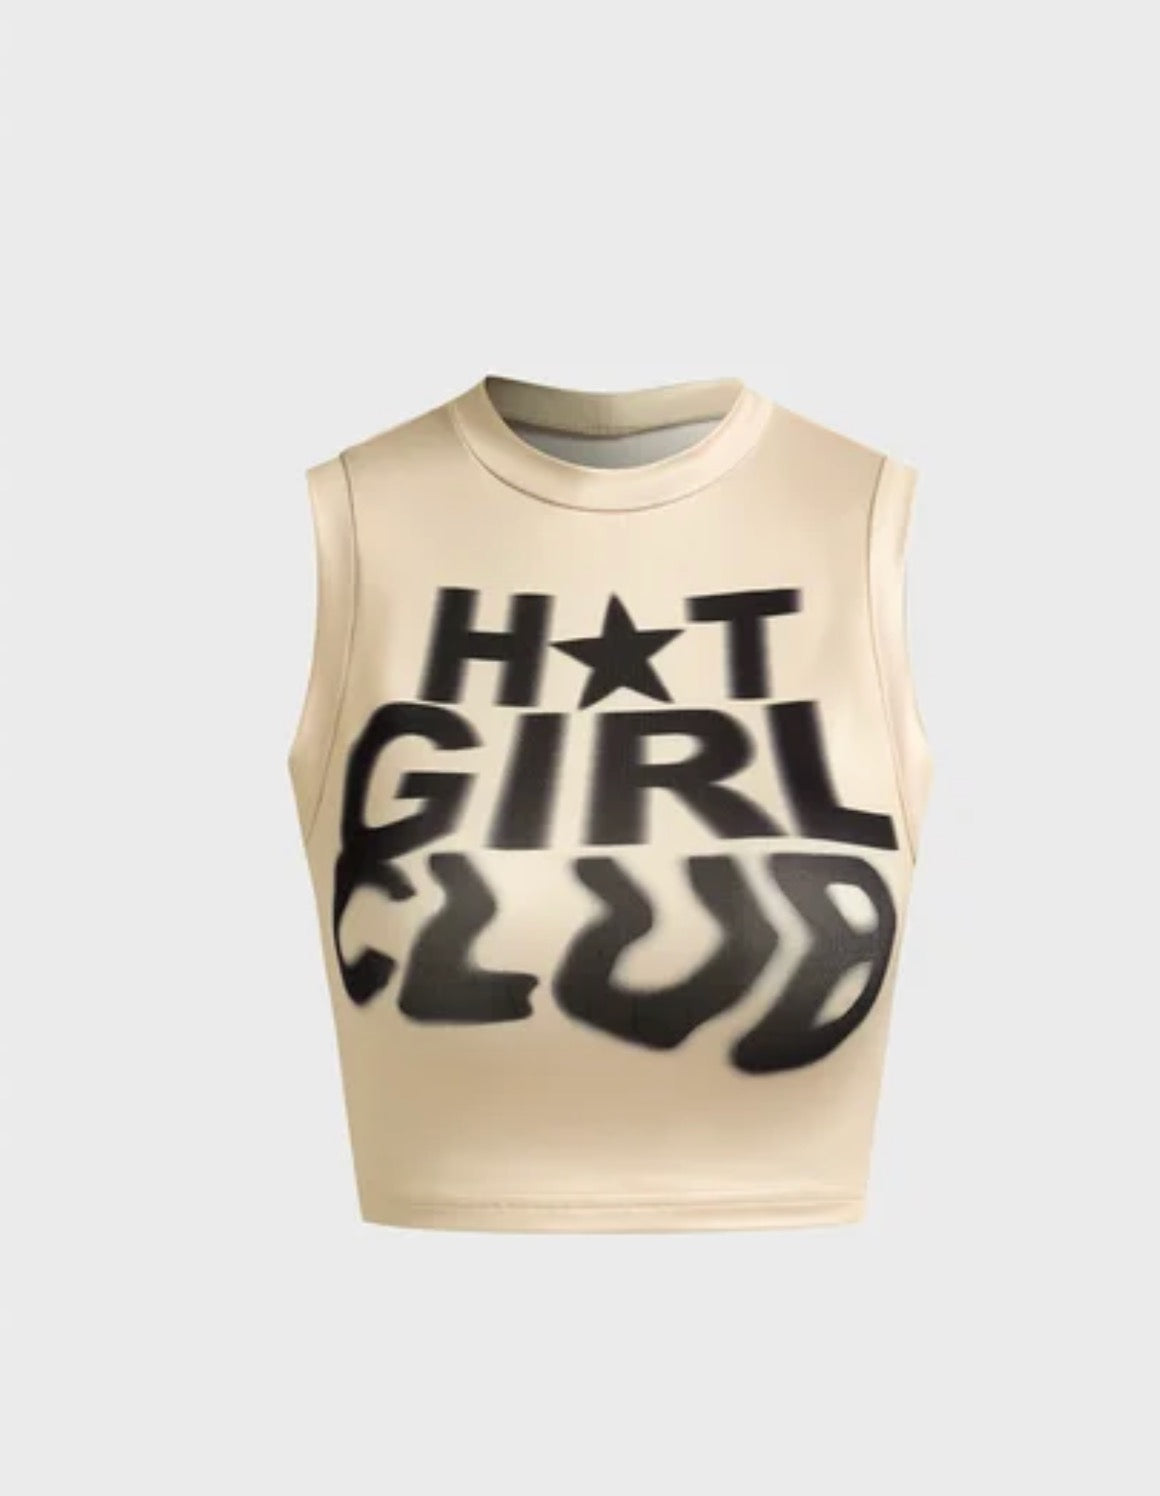 Hot Girl Club Tank